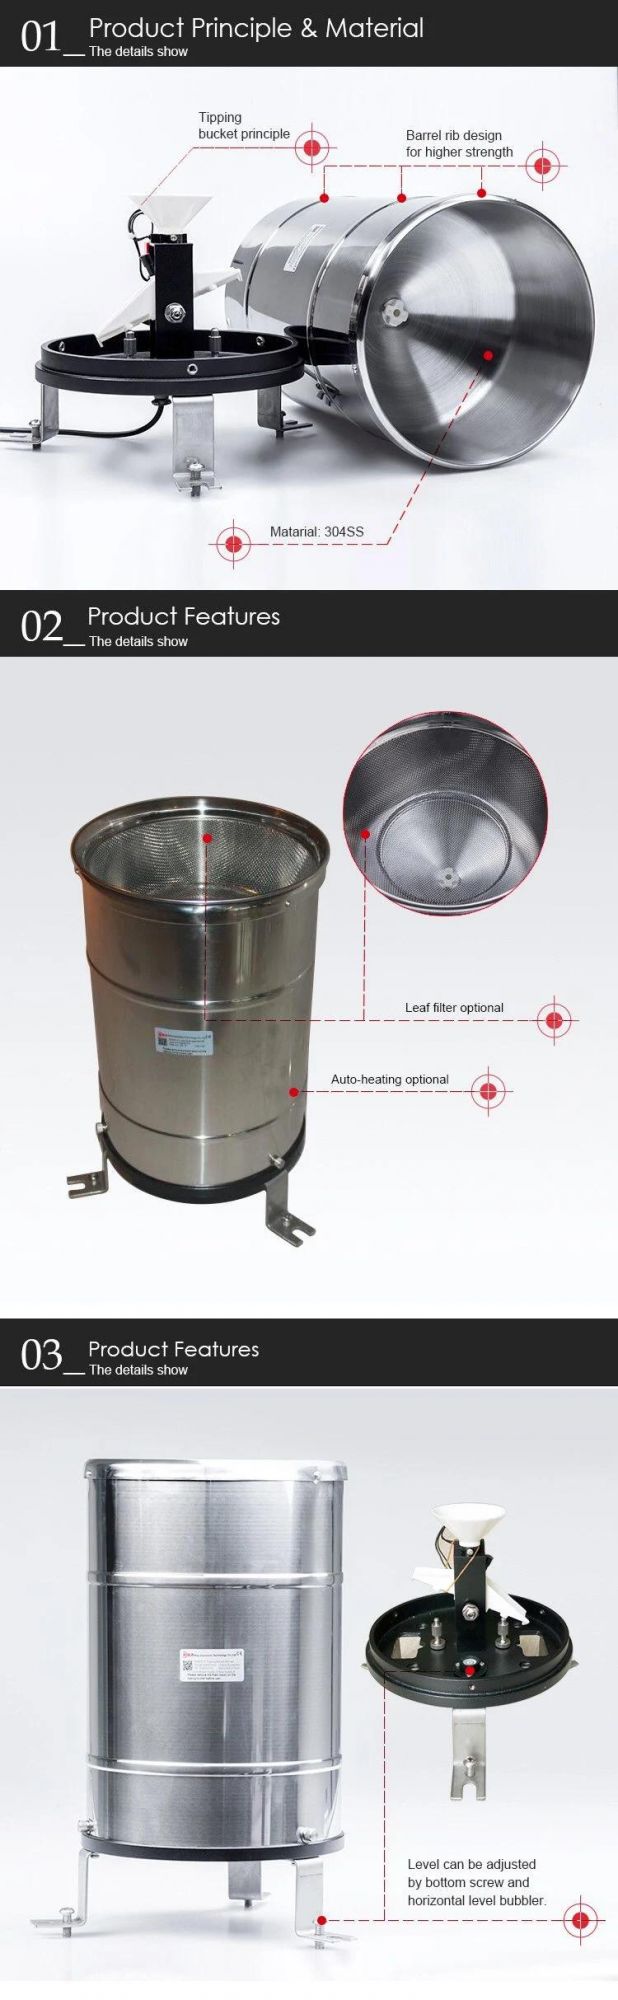 Rika Rk400-01 Resolution 0.2mm Stainless Steel Tipping Bucket Rain Gauge for Meteorology